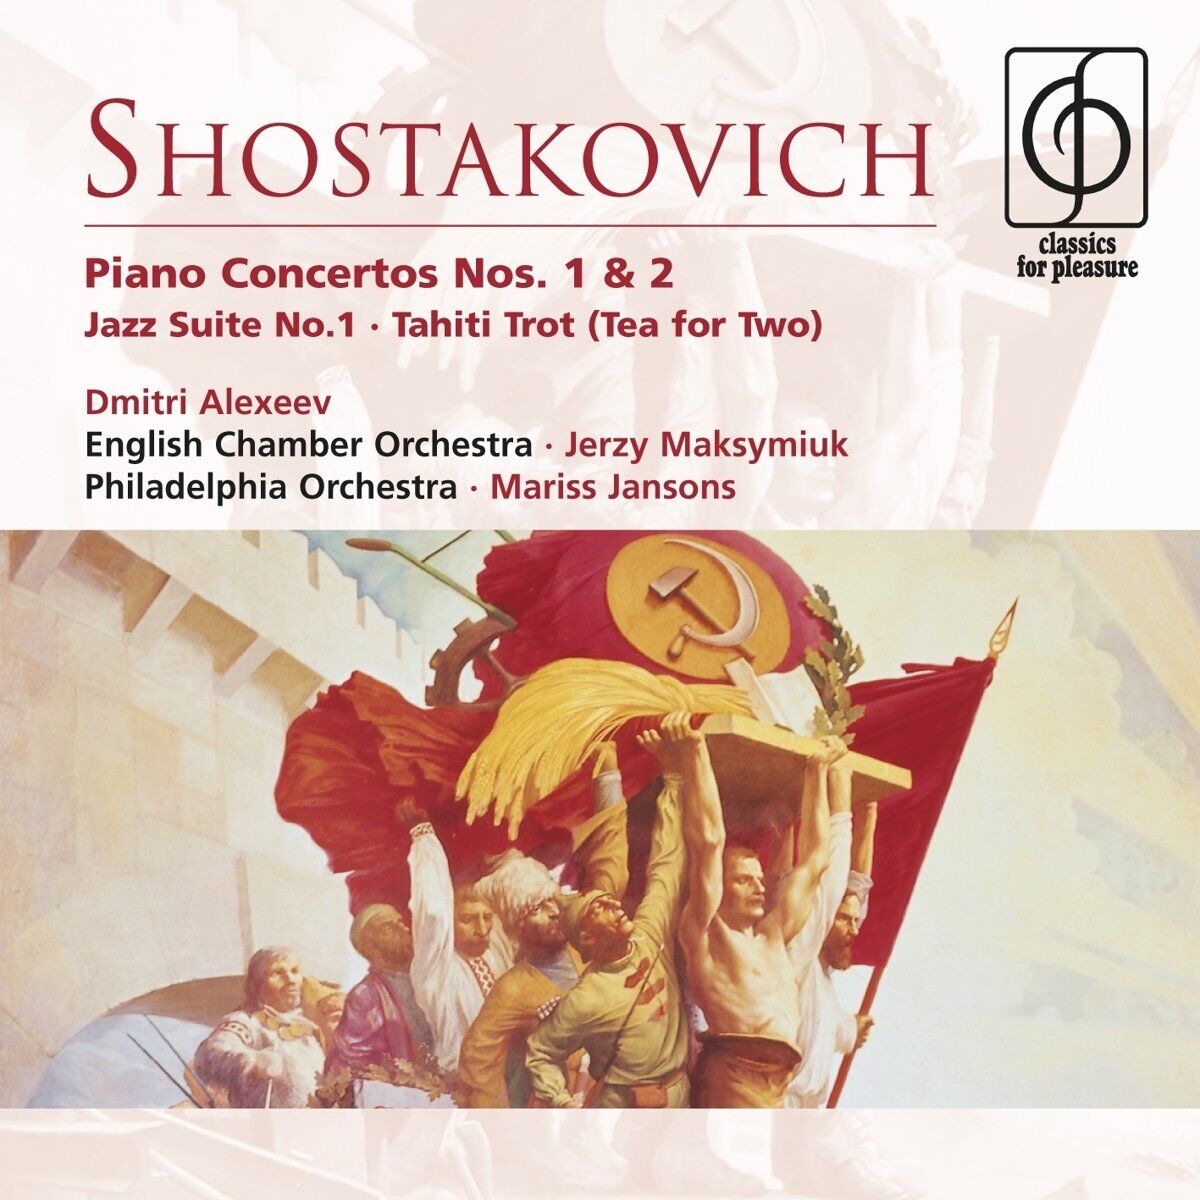 Shostakovich: Piano Concertos Nos. 1 & 2; Jazz Suite No. 1; Tahiti Trot (Tea for